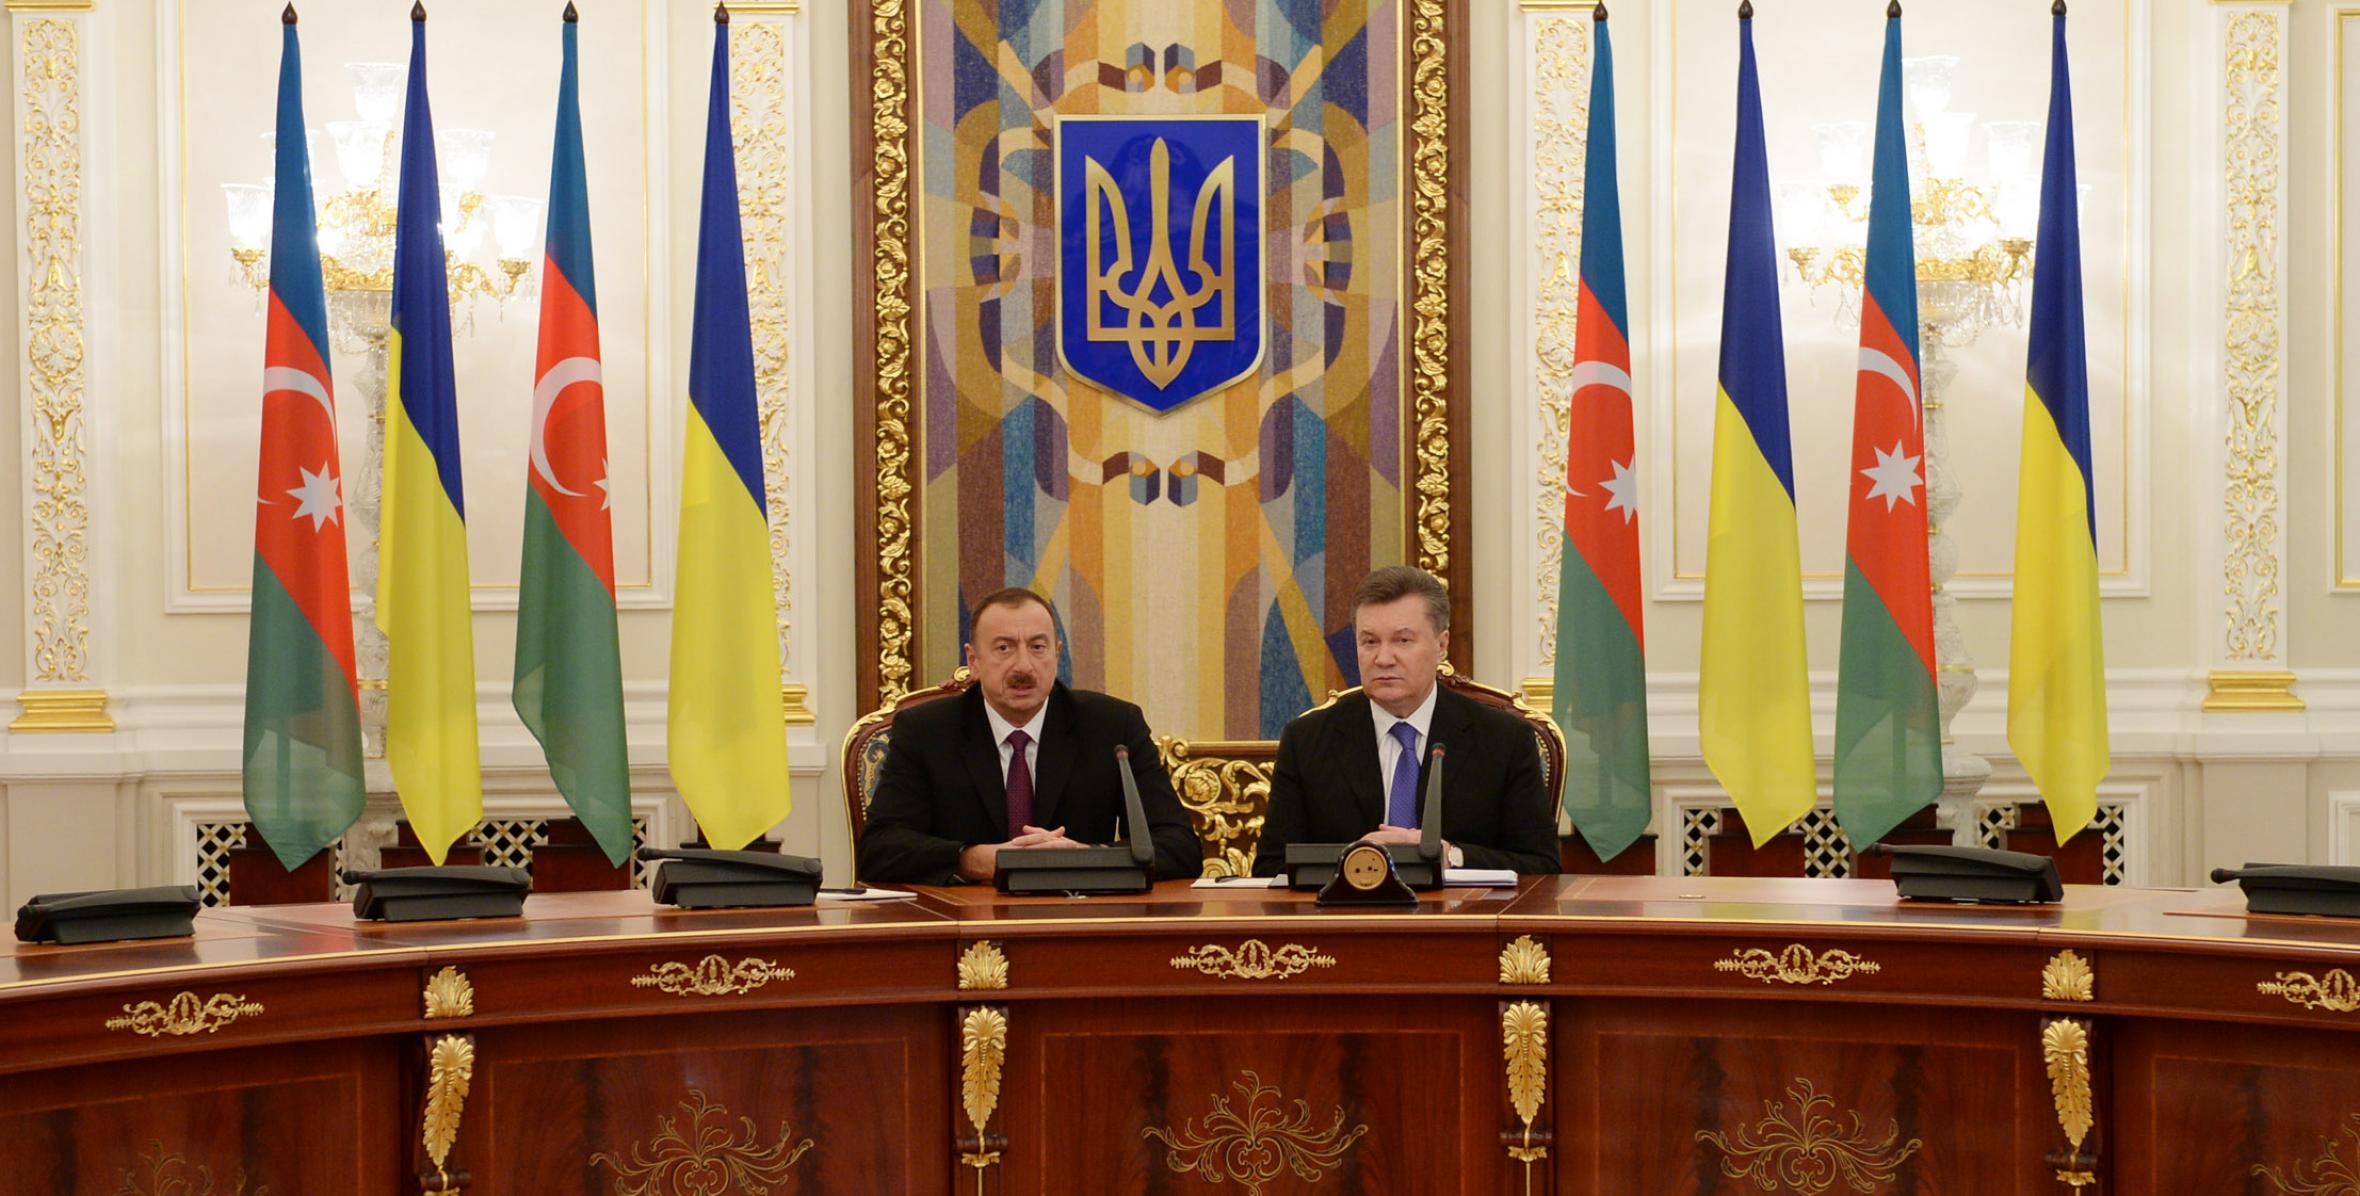 Ilham Aliyev and Ukrainian President Viktor Yanukovych made statements for the press